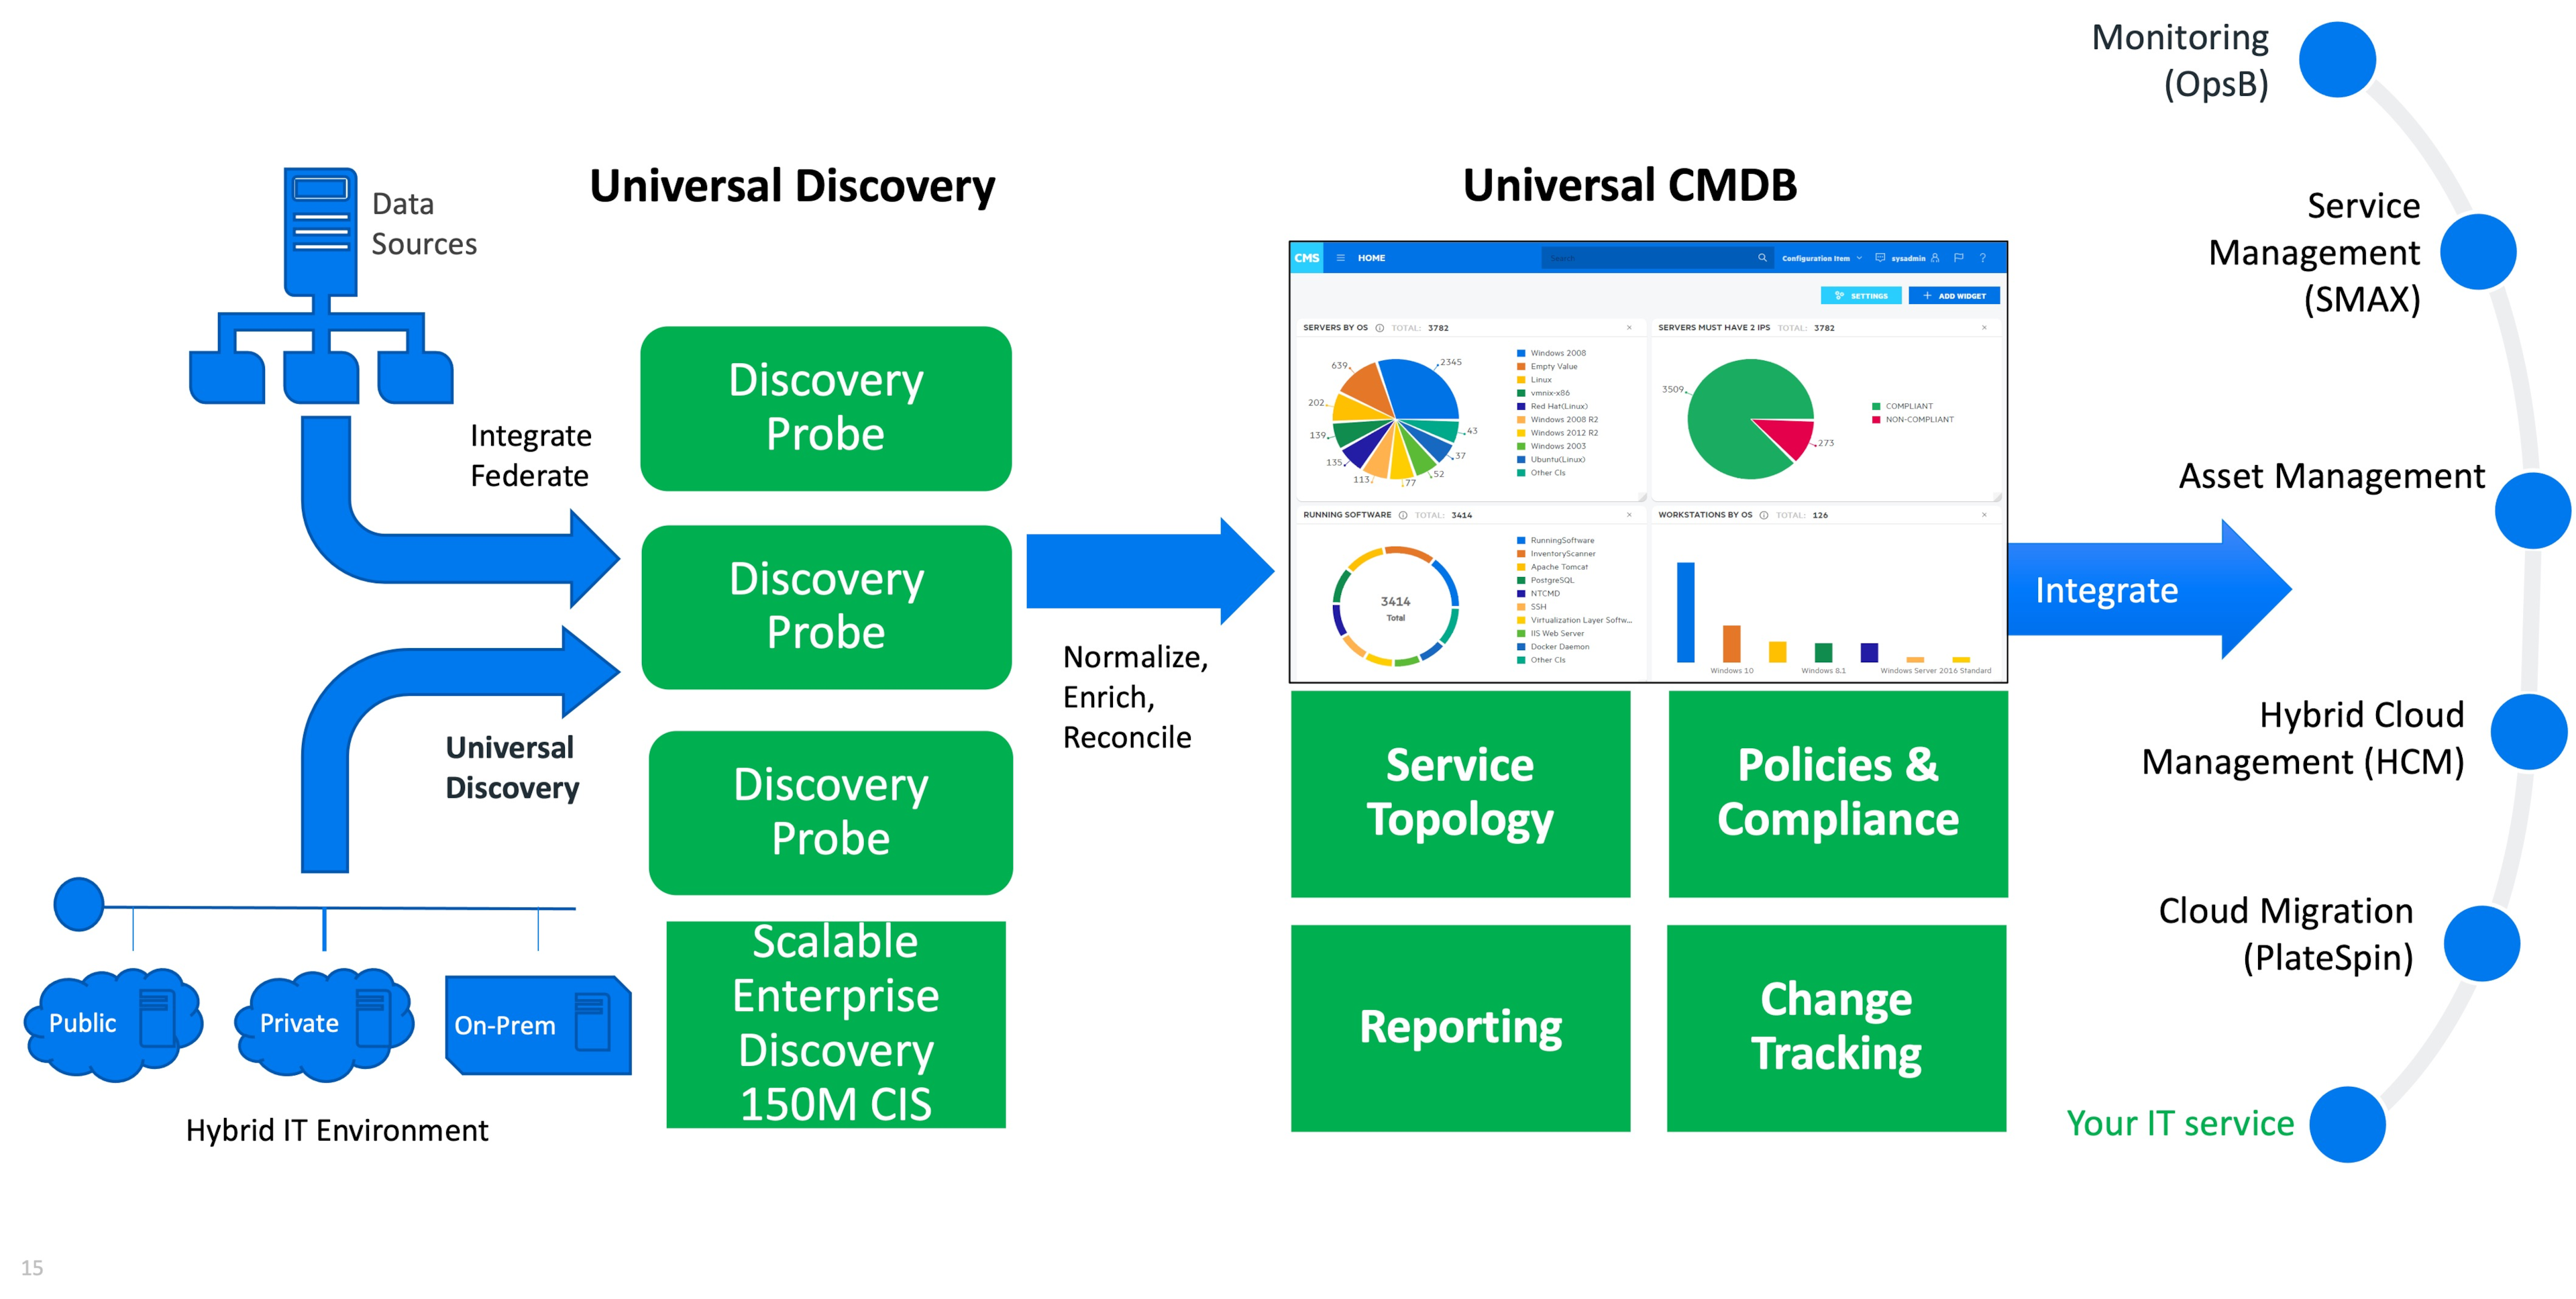 Universal Discovery and Universal CMDB